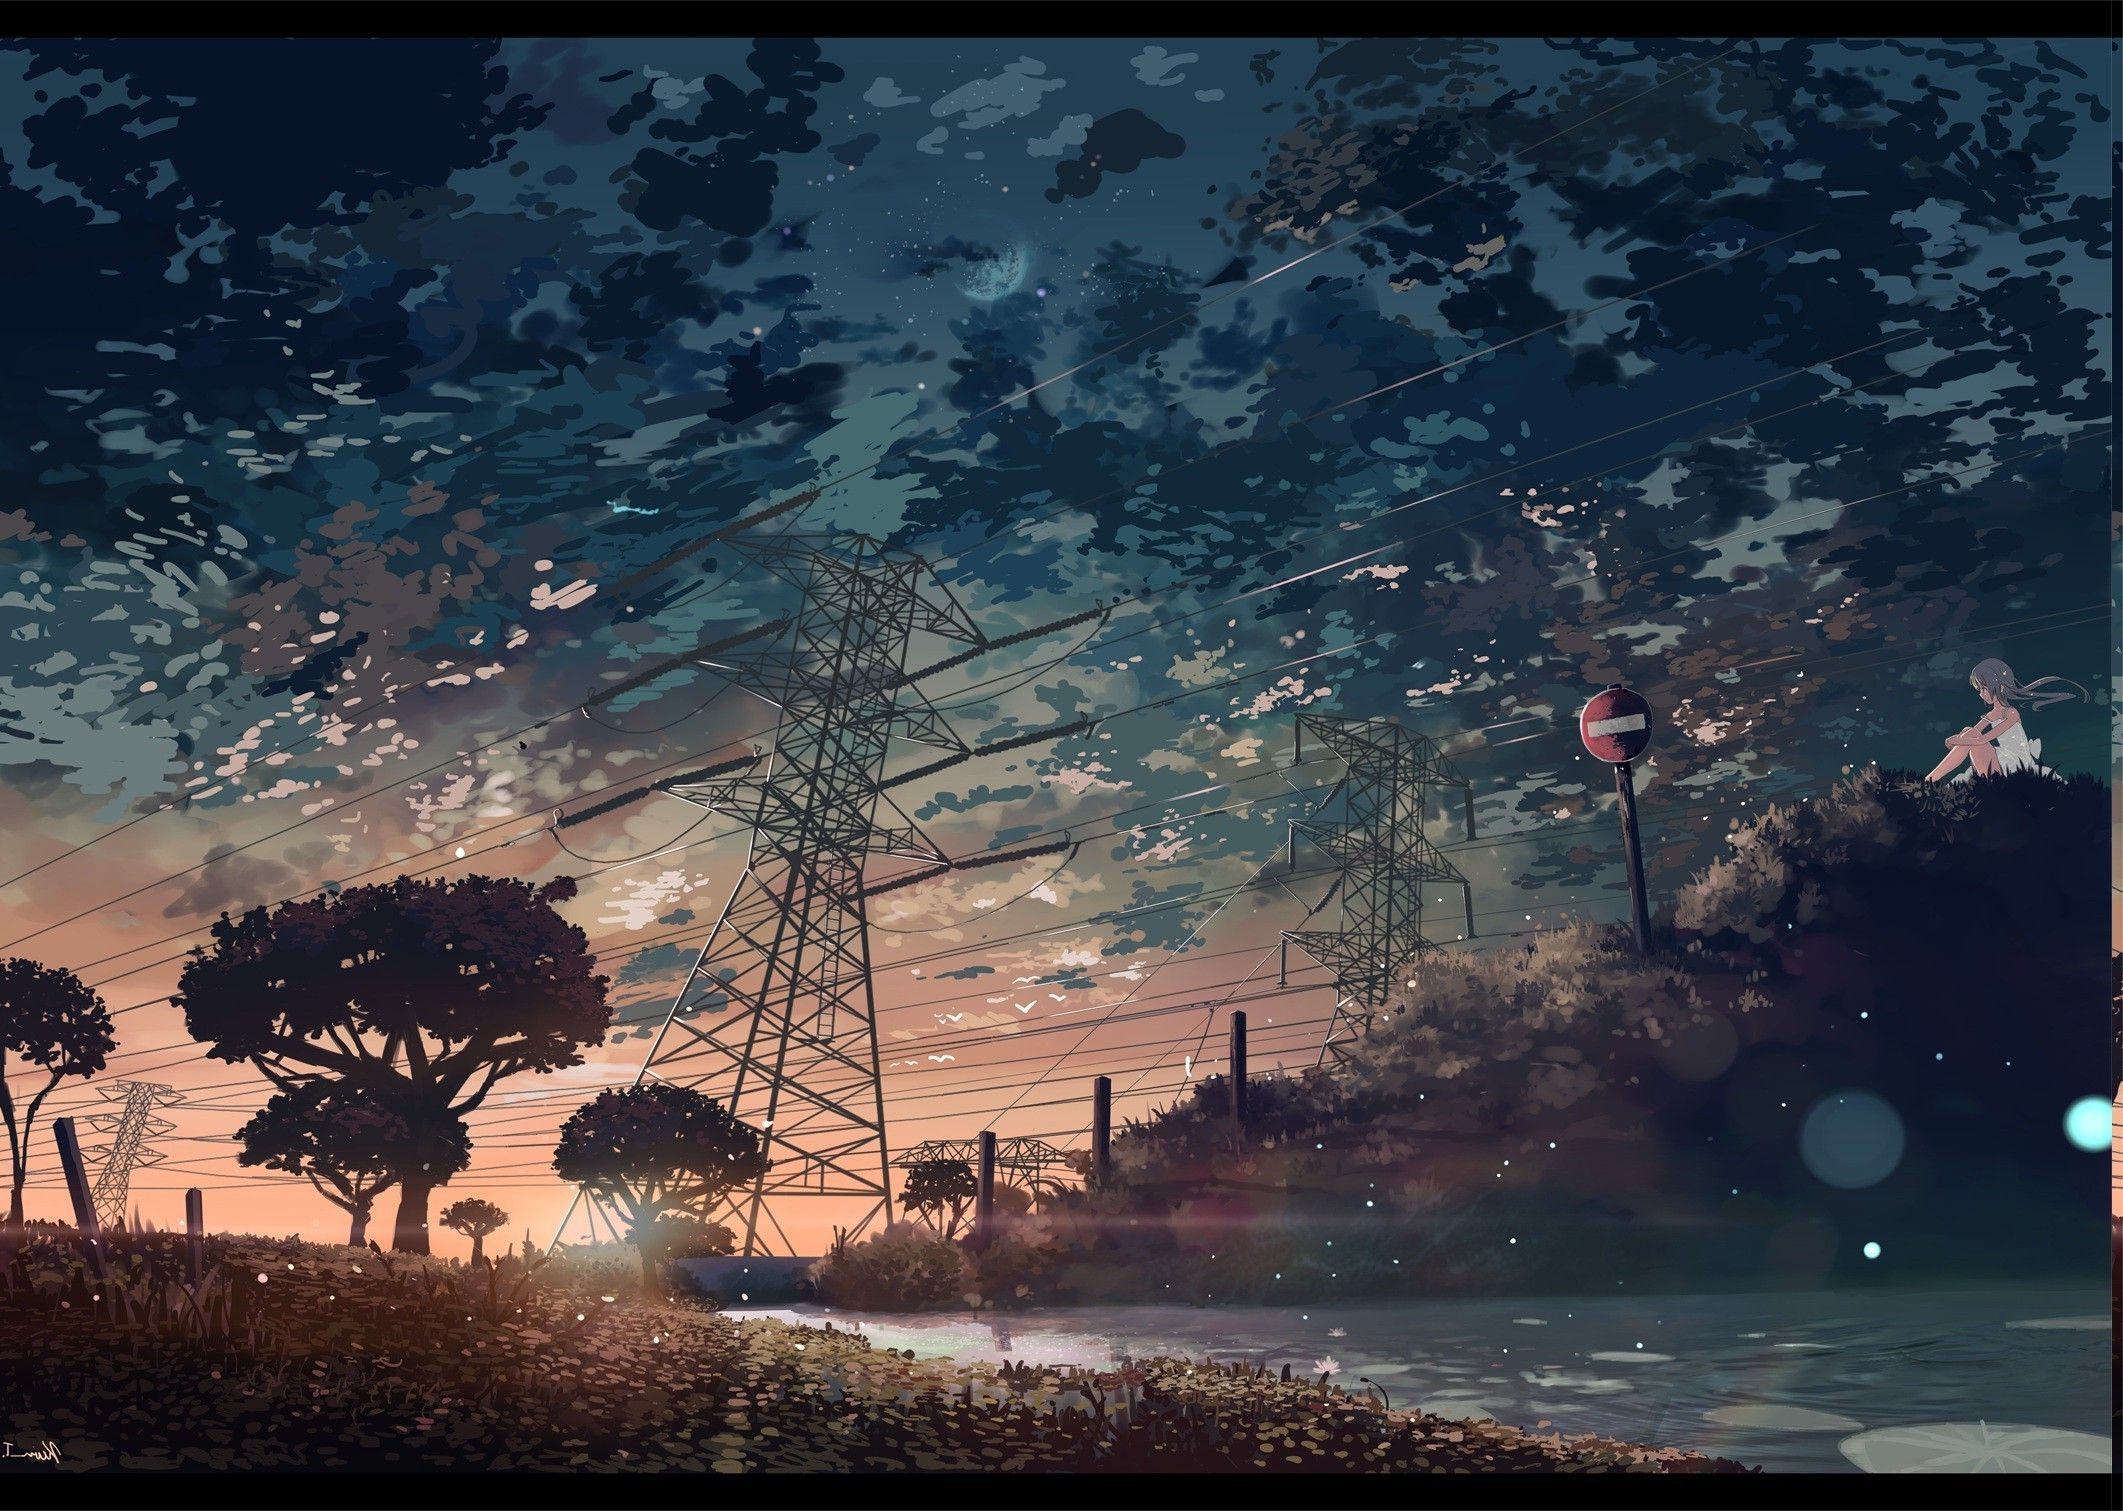 Anime Nature Wallpaper. Landscape wallpaper, Scenery wallpaper, Anime scenery